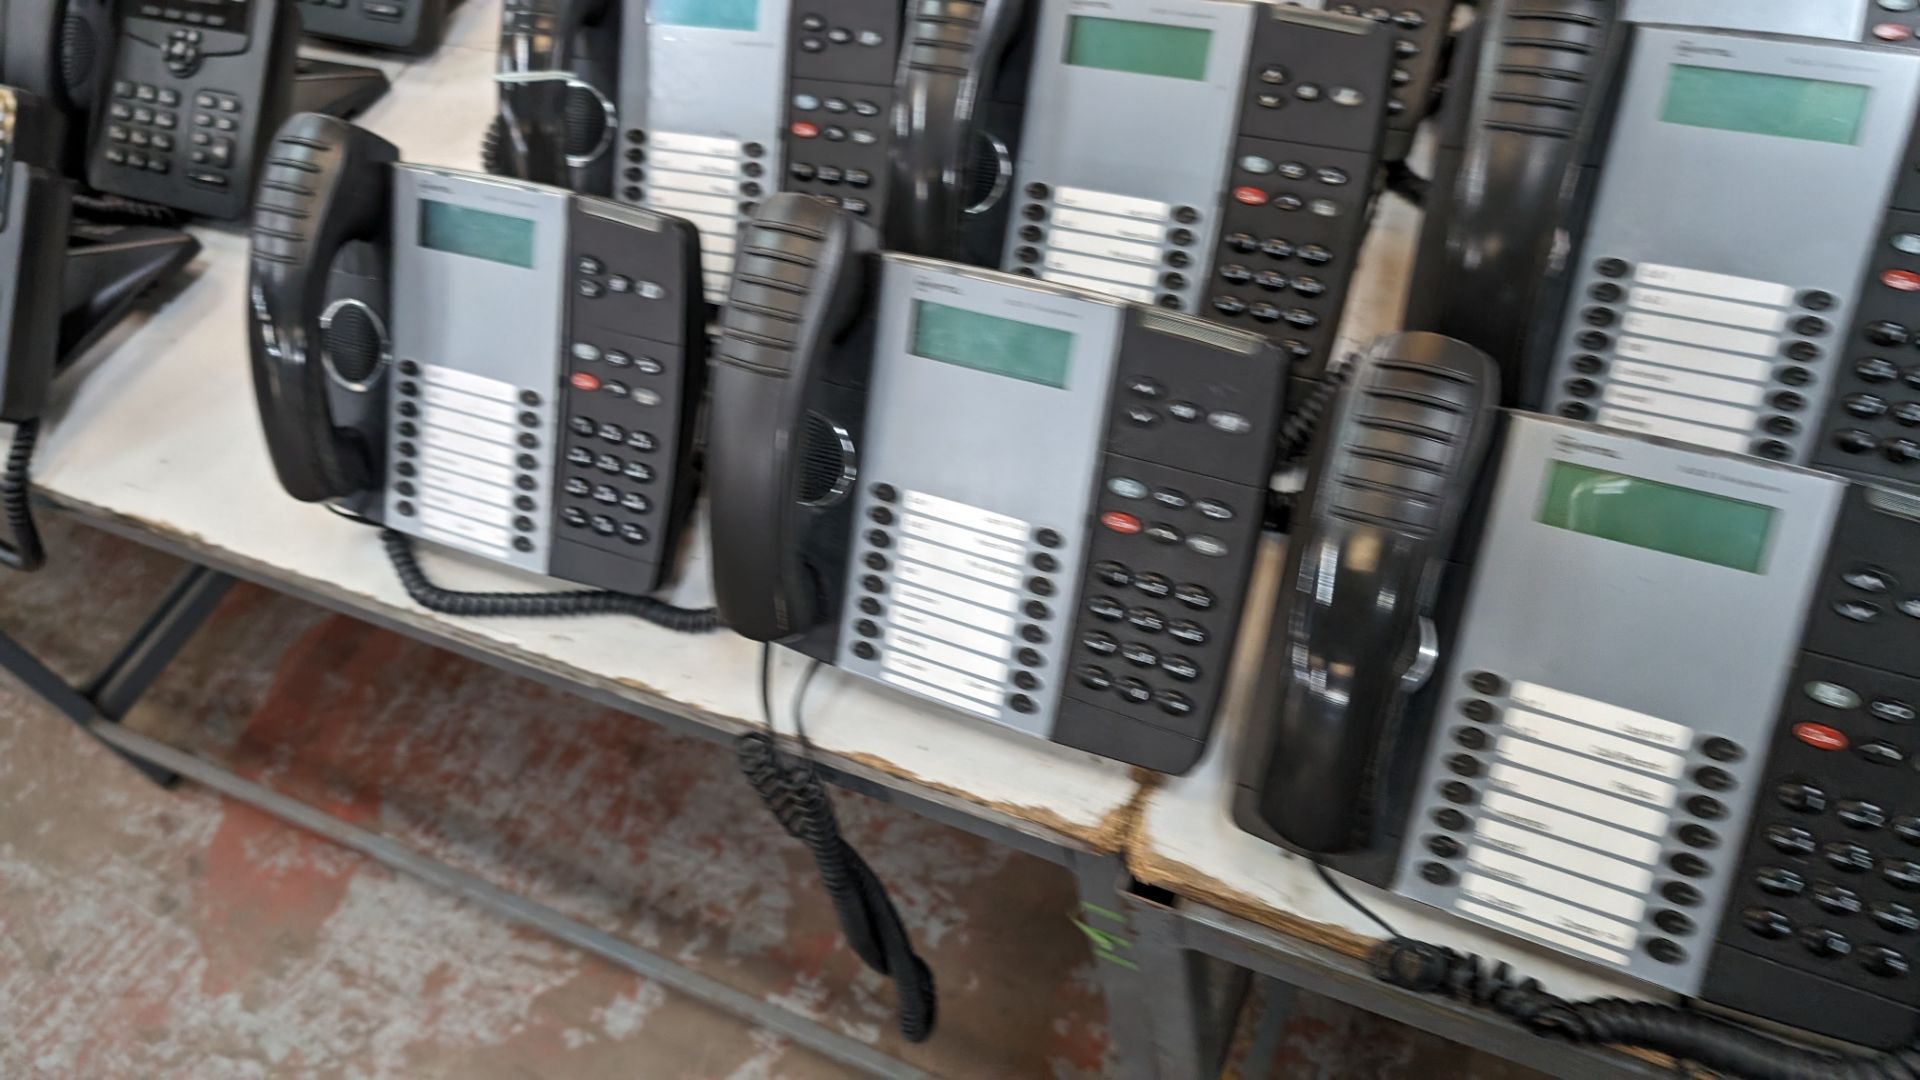 20 off Mitel model 8528 telephone handsets - Image 5 of 13